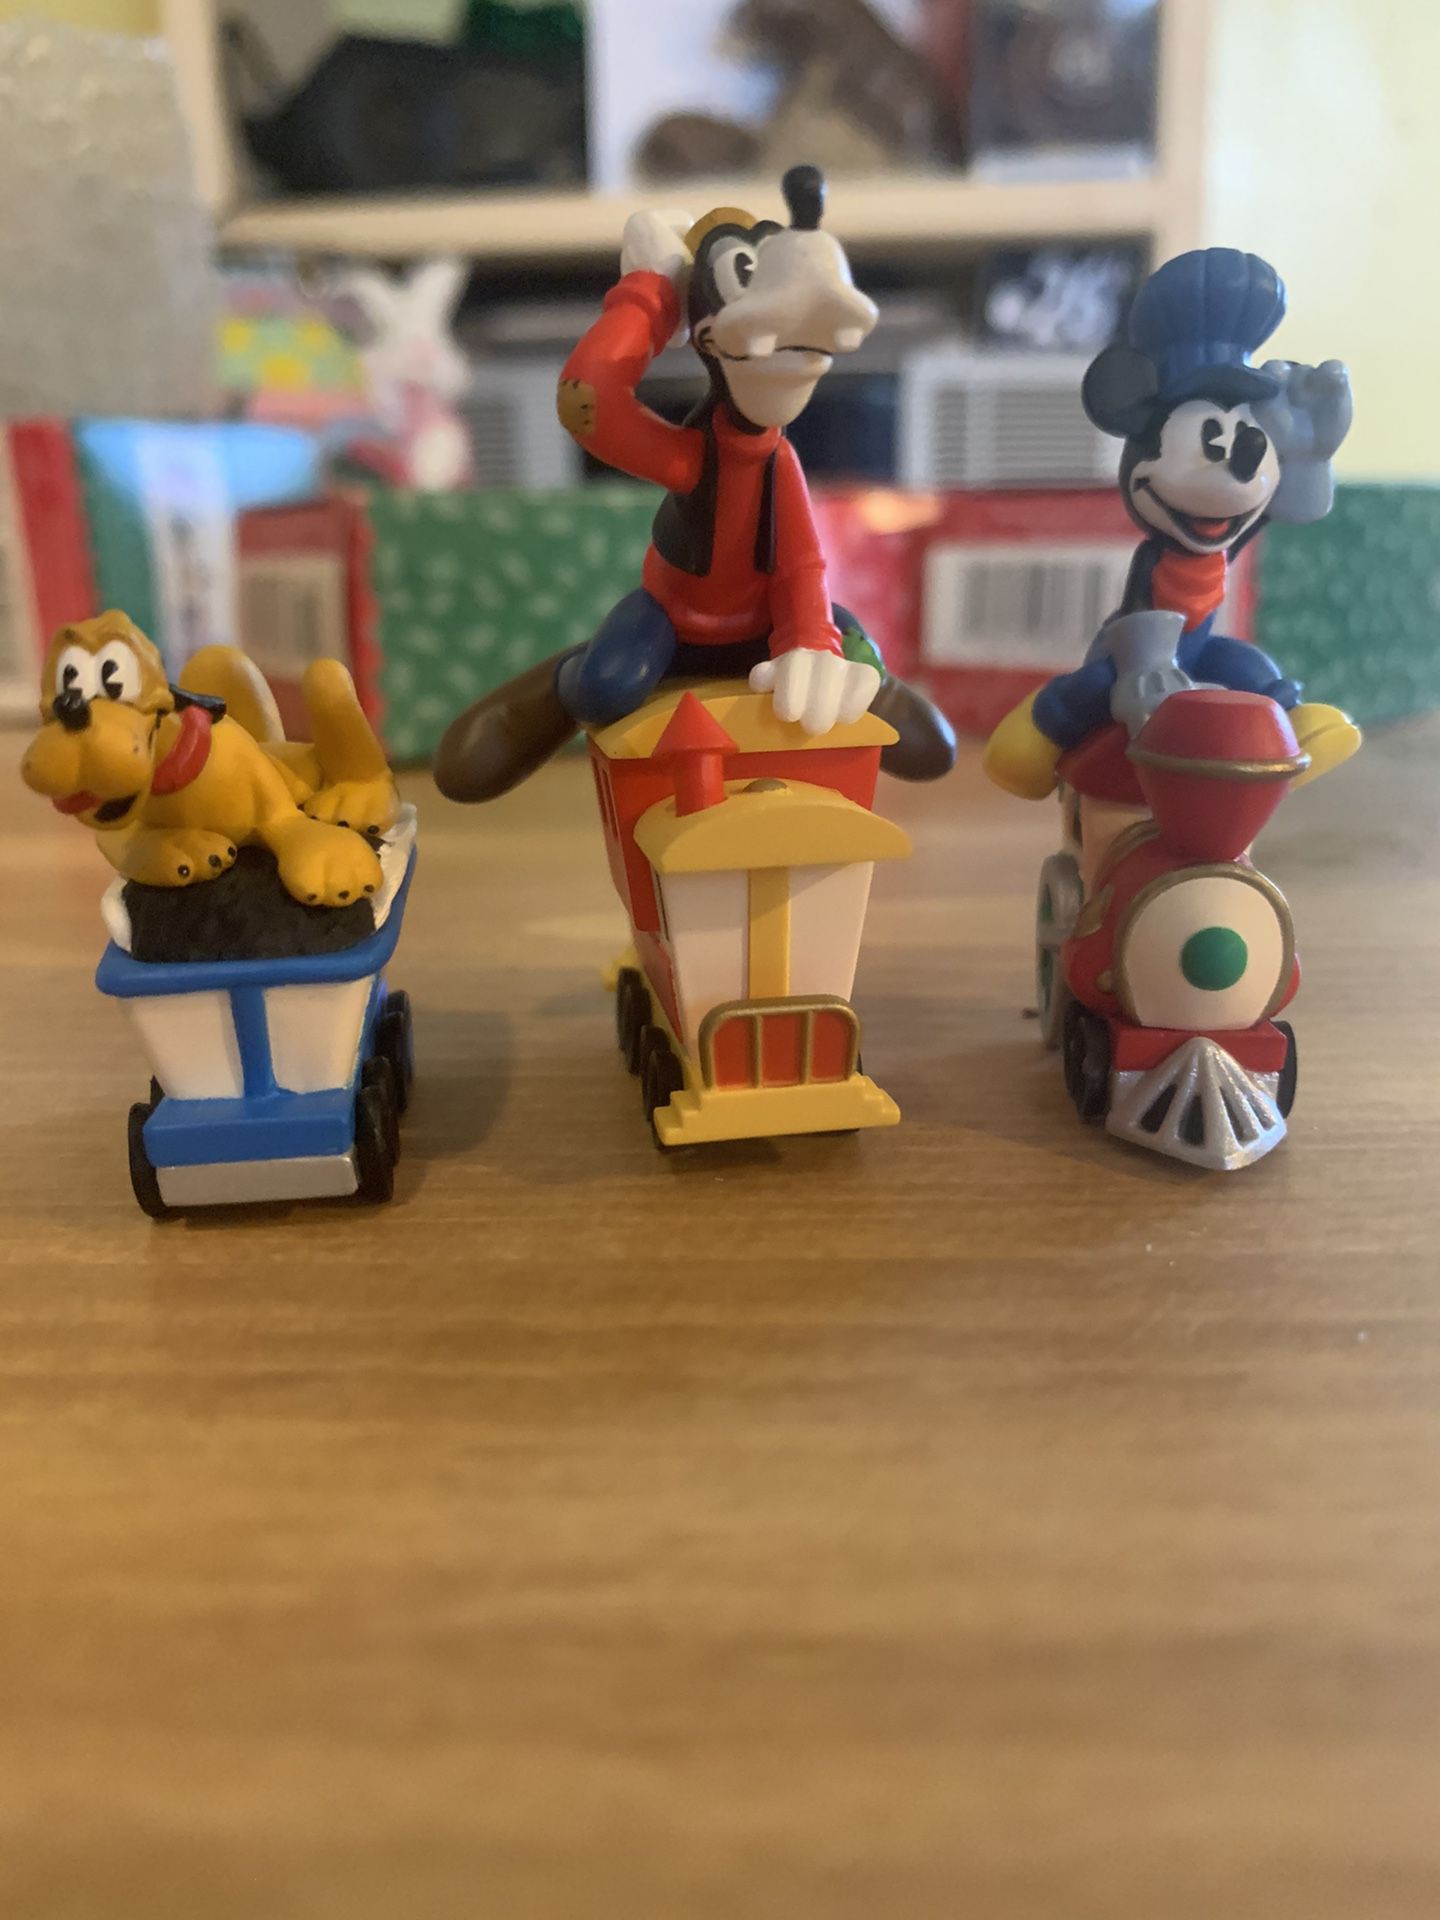 Hallmark Merry Miniatures Mickey’s Express Locomotive, Goofy’s Caboose, Pluto’s Coal Car